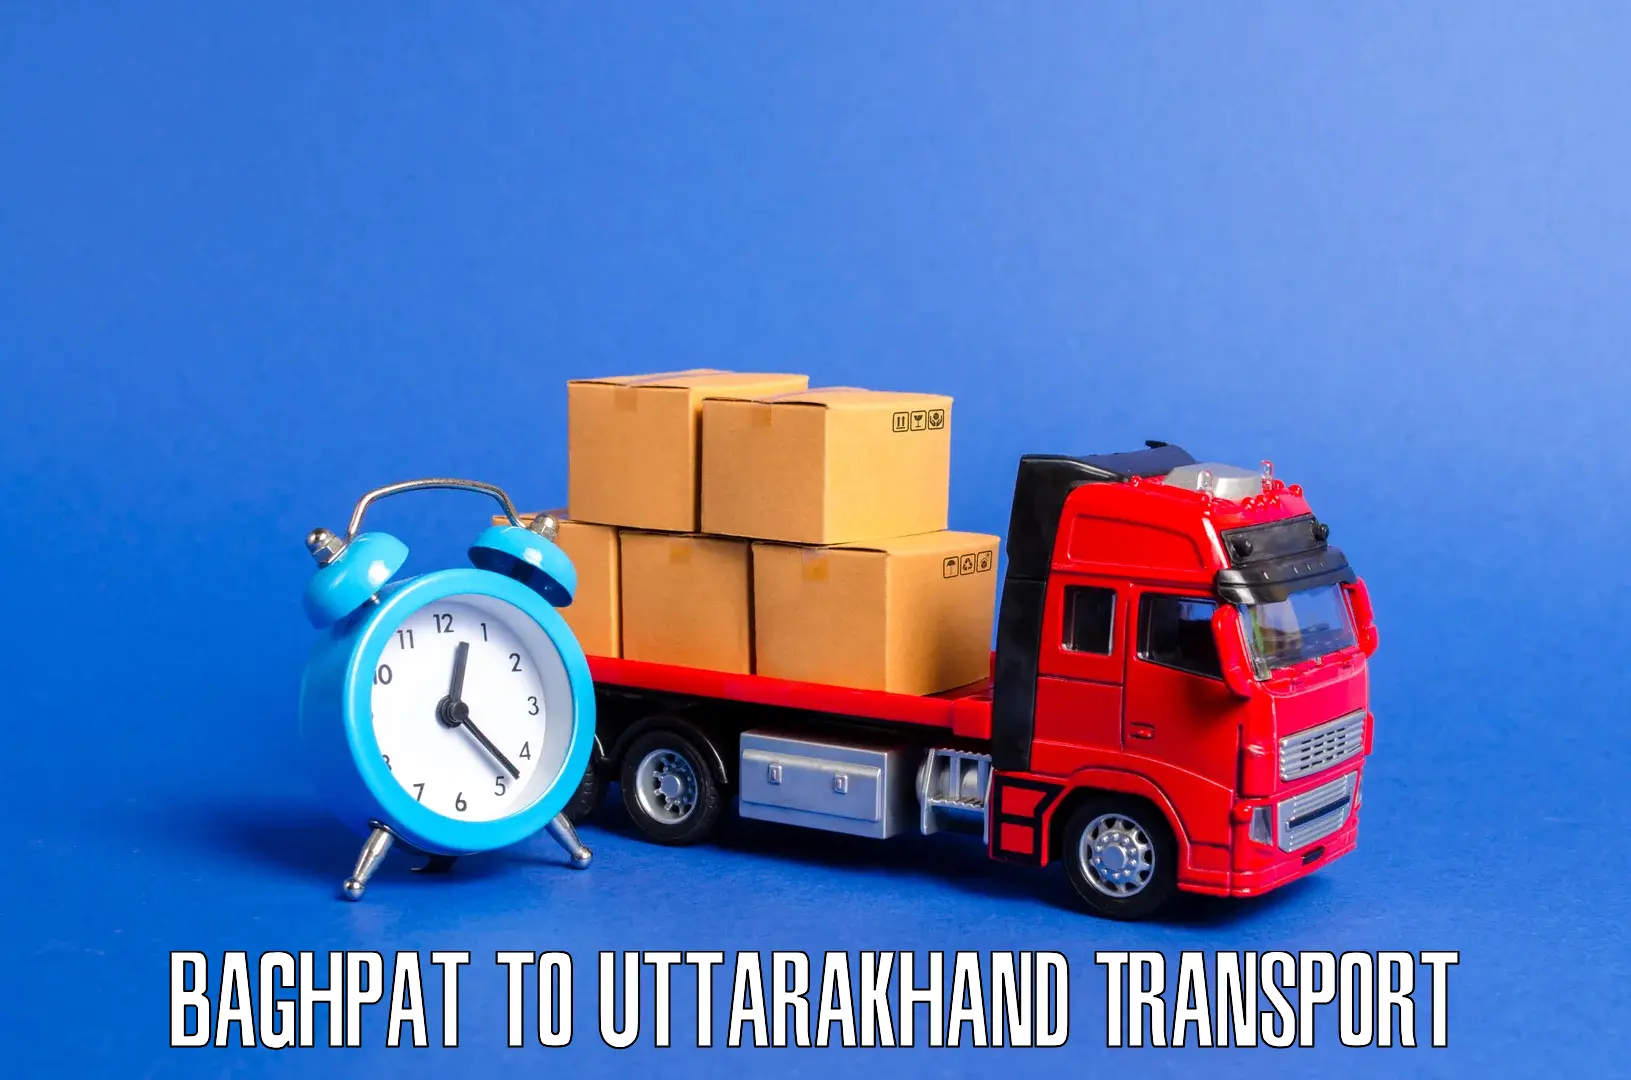 Transport in sharing Baghpat to Rudraprayag